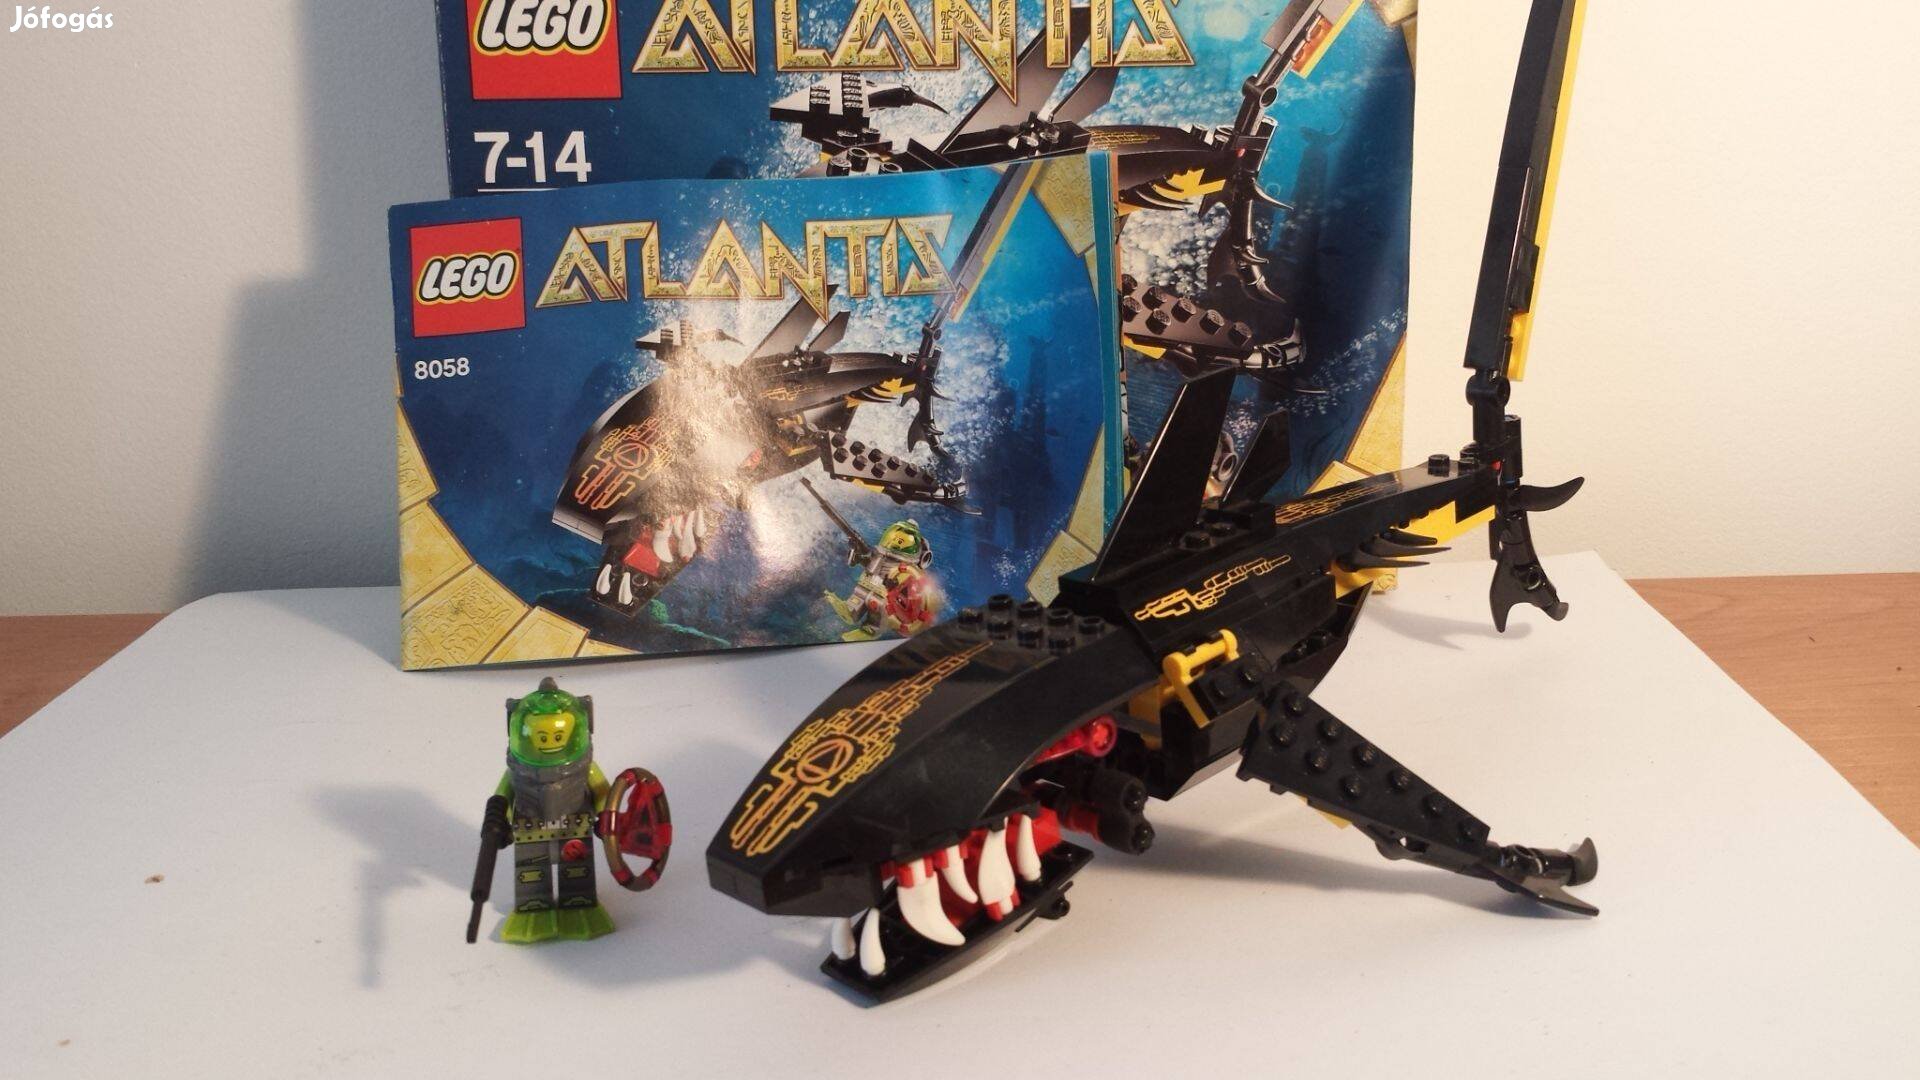 Lego Atlantis 8058